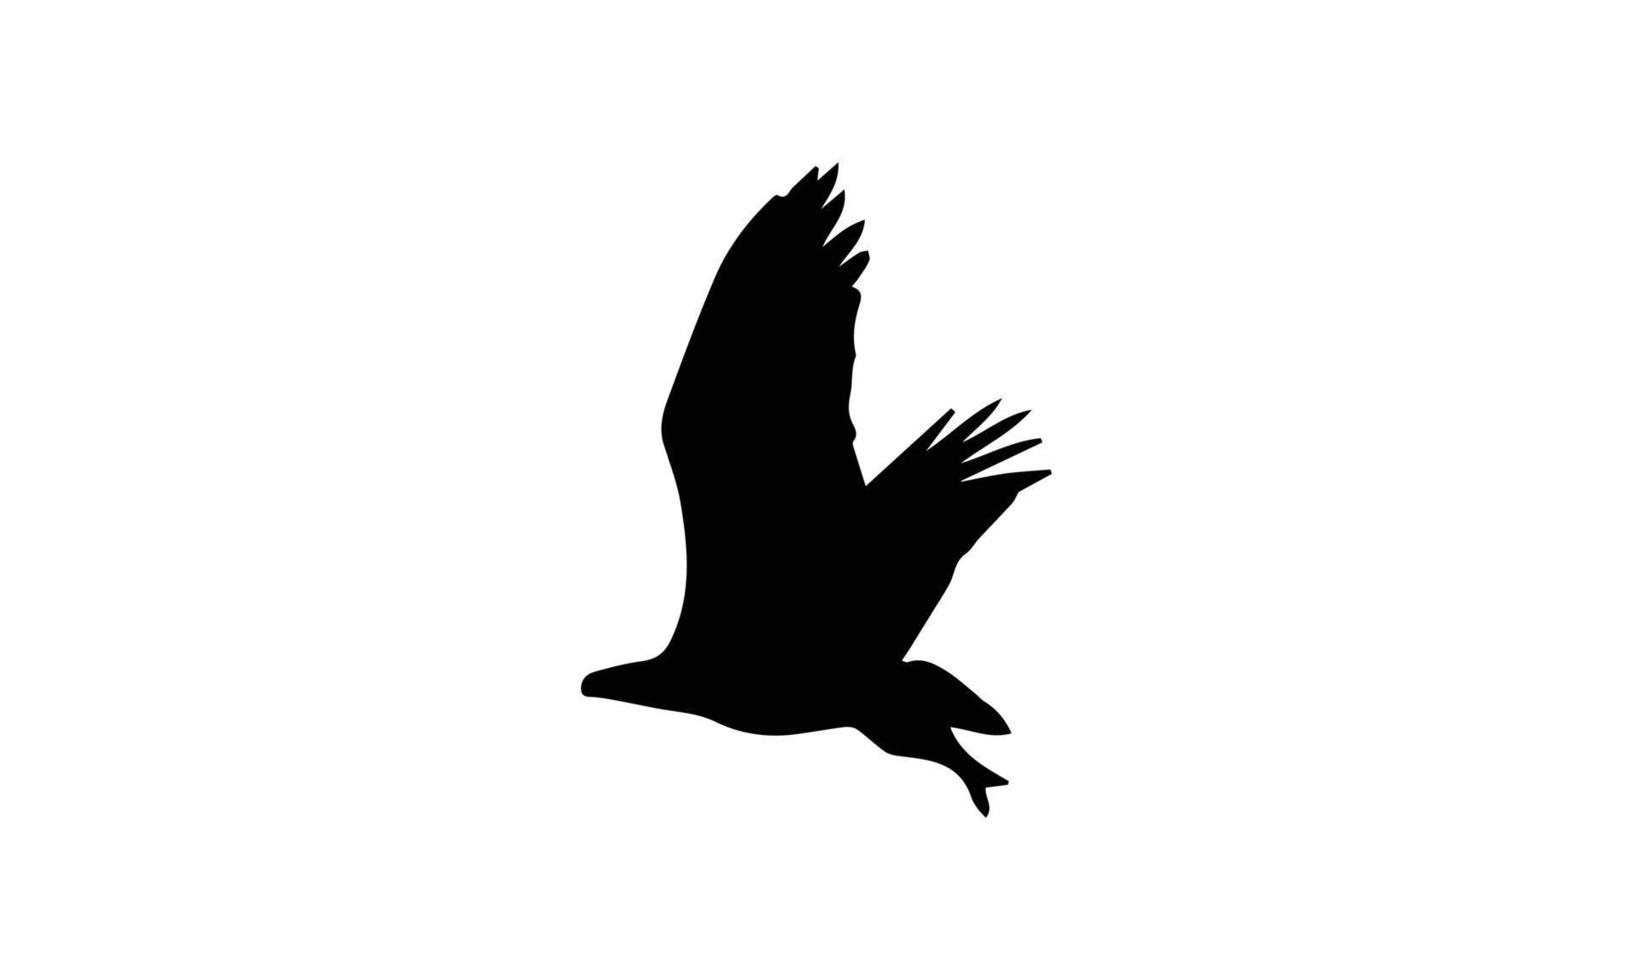 Diseño de ilustración de vector de silueta de águila